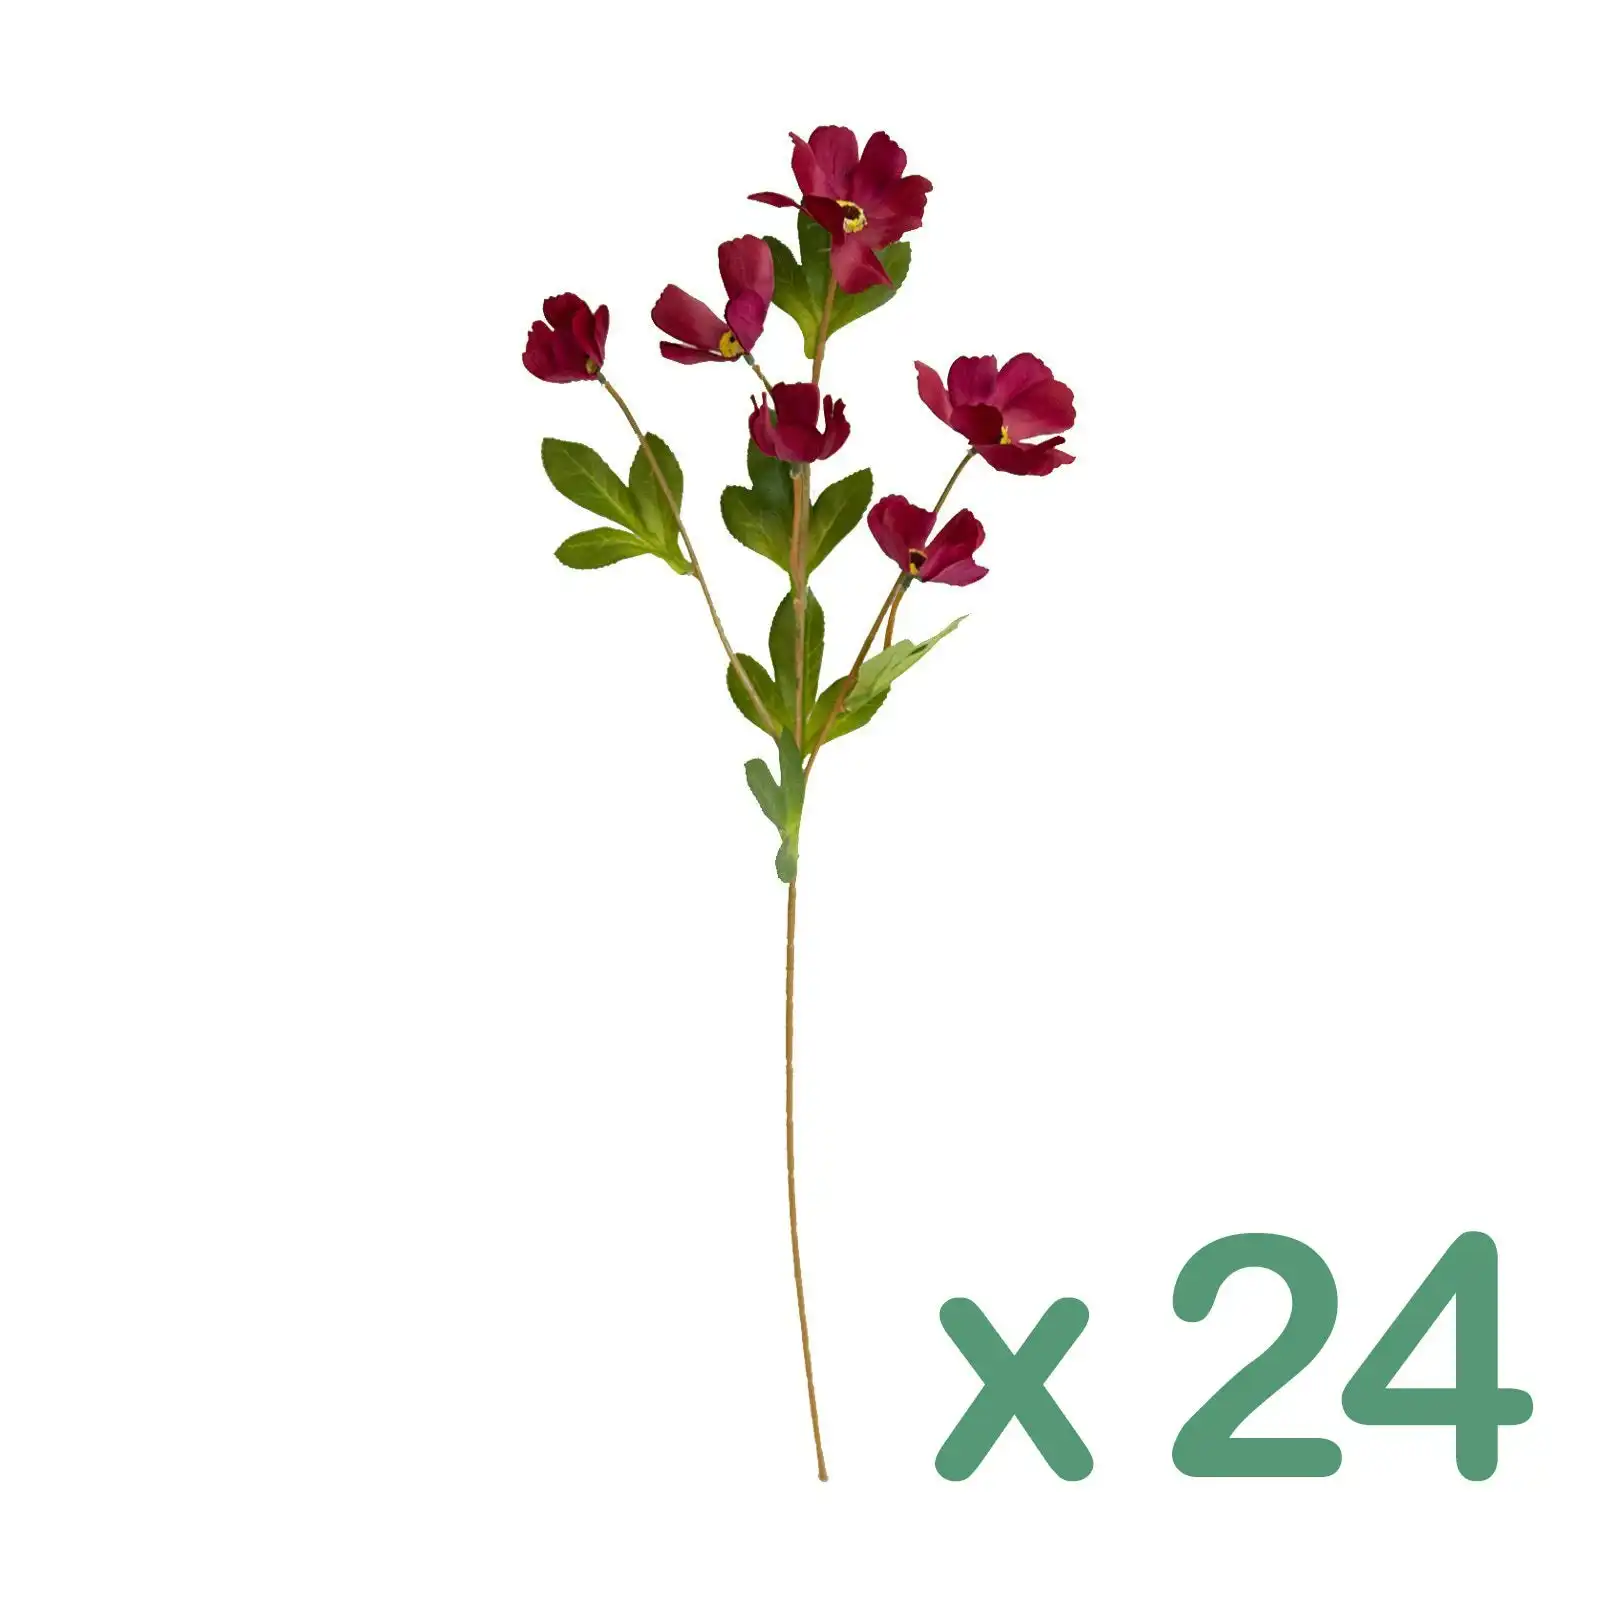 Carton of 24 - Artificial Flowers - Wild Poppy - RED 60cm